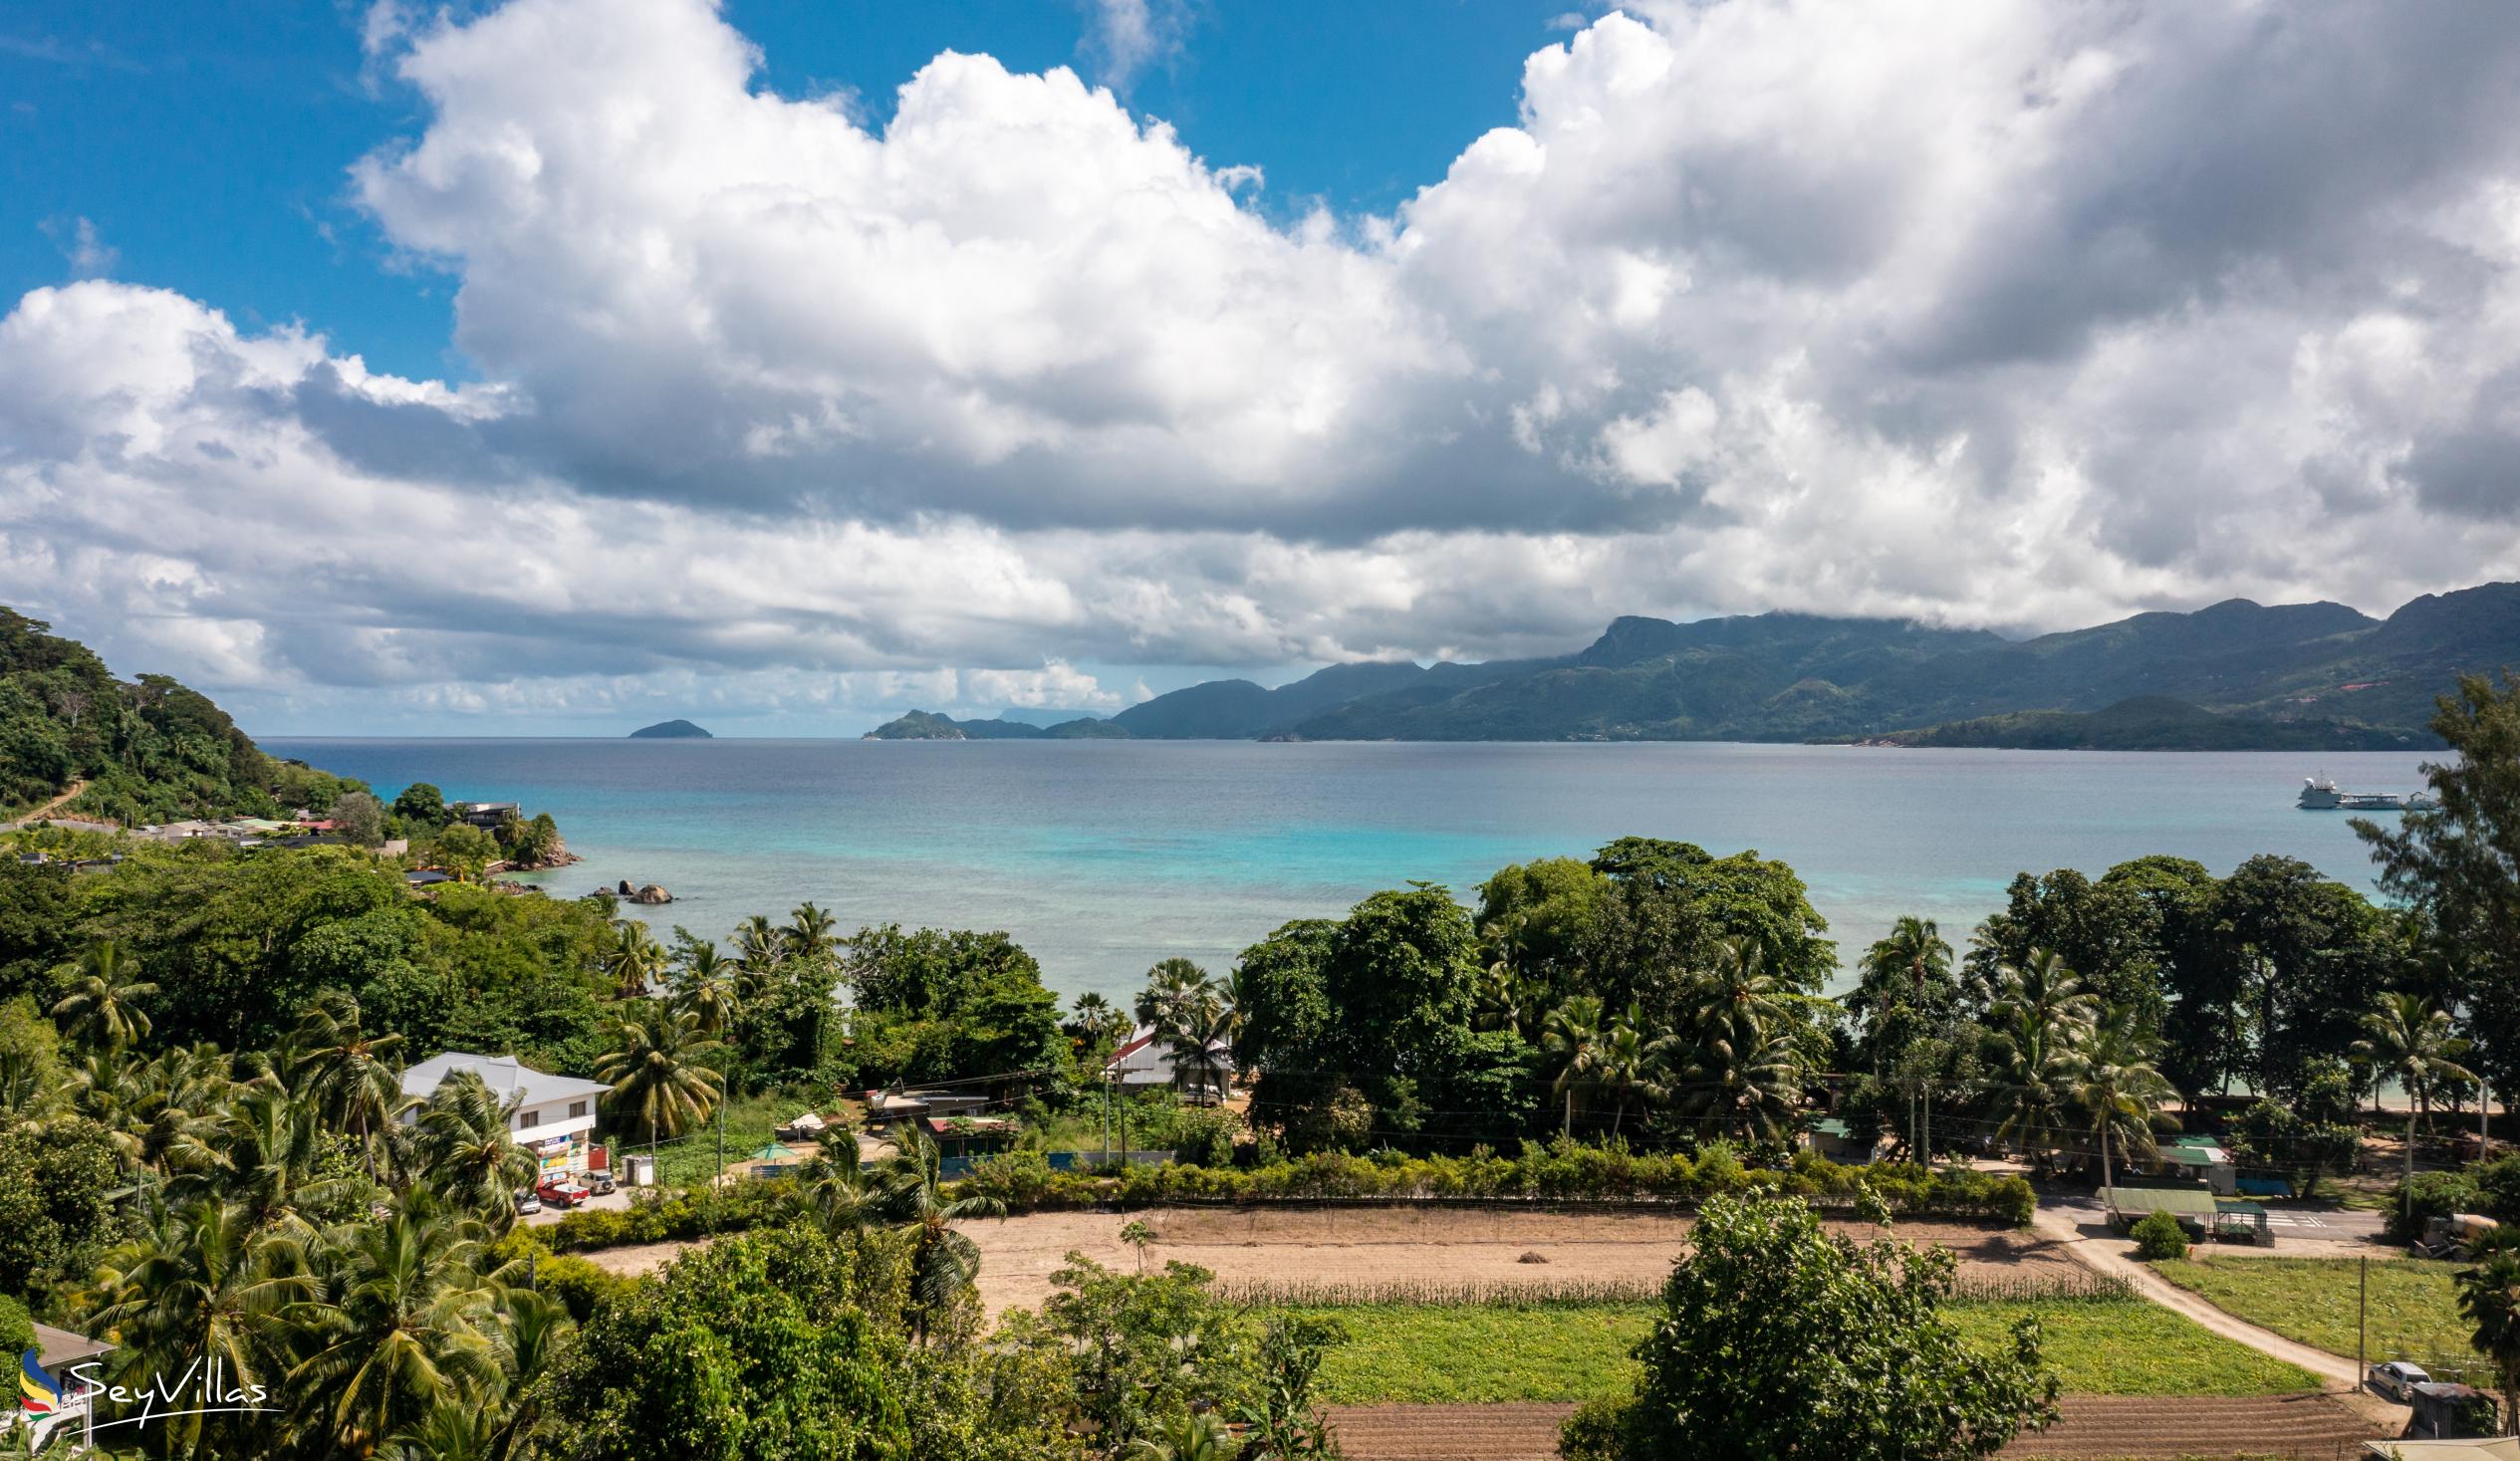 Foto 14: Paul's Residence - Location - Mahé (Seychelles)